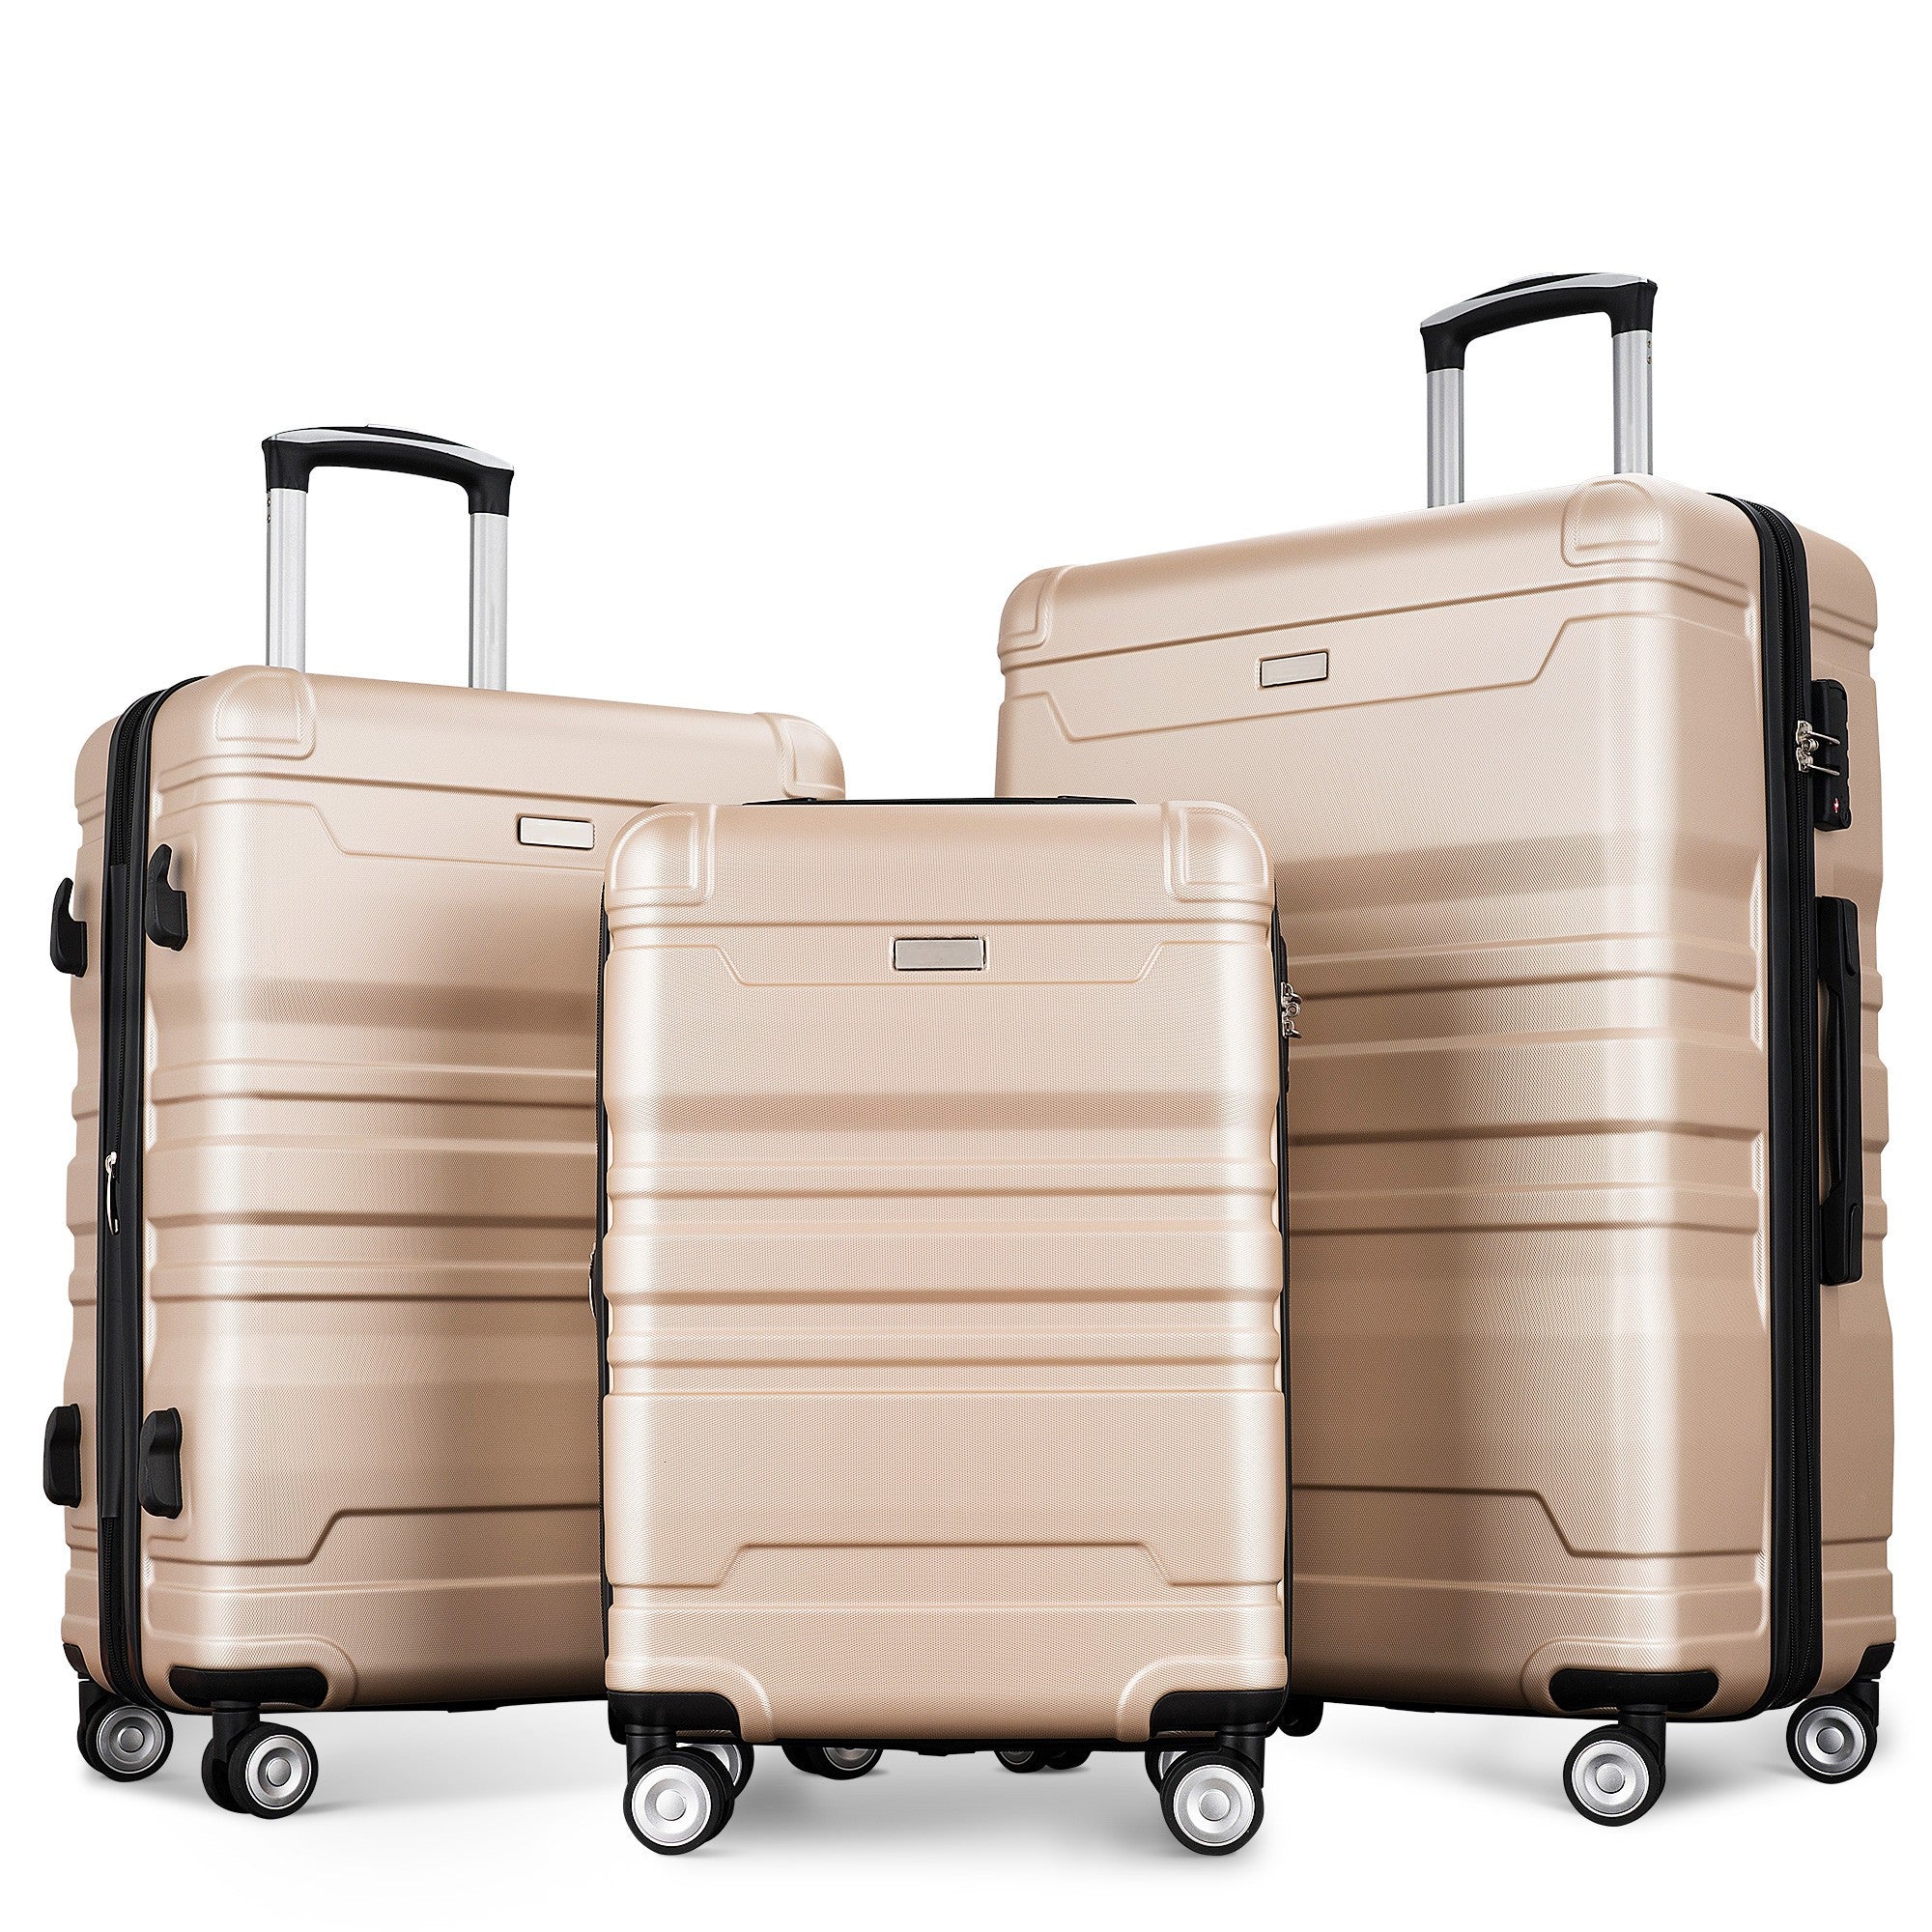 Luggage Sets New Model Expandable ABS Hardshell 3pcs Clearance Luggage (Champagne)